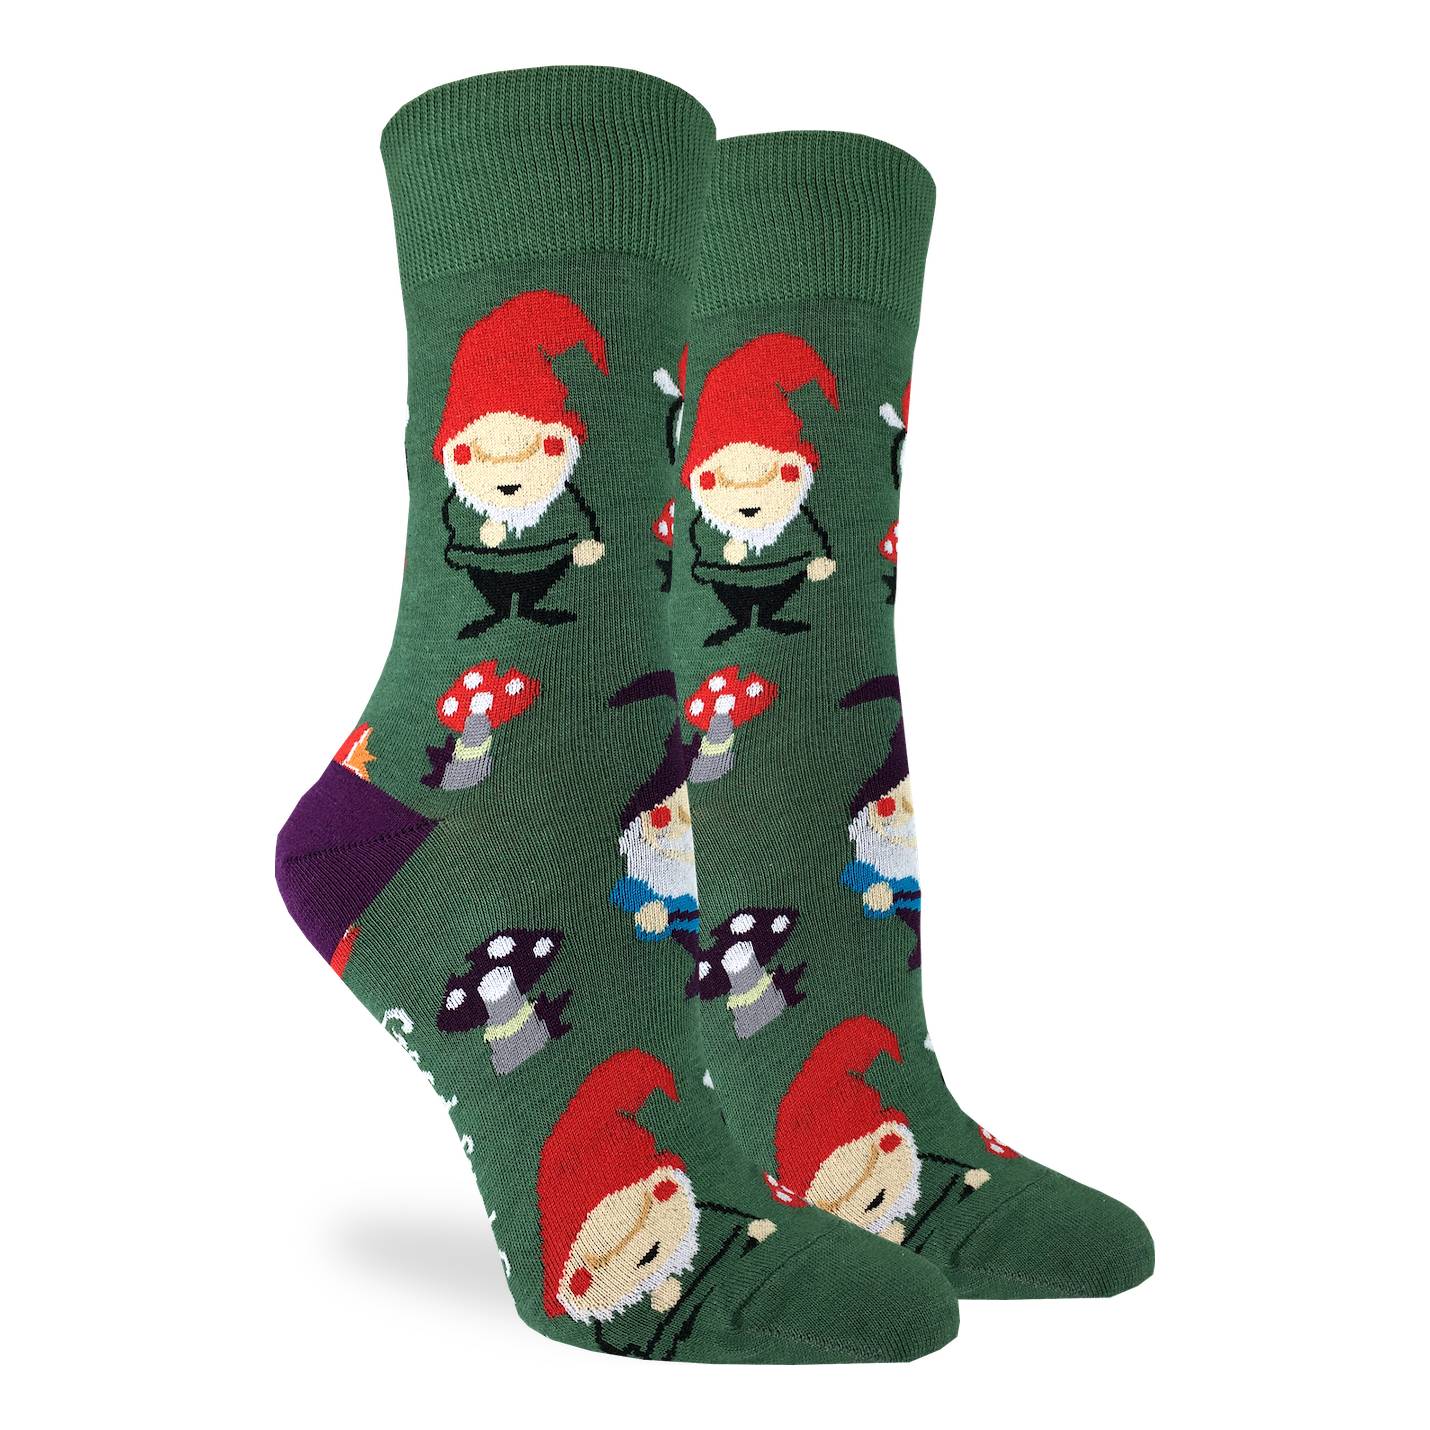 Good Luck Sock - Women's Lawn Gnomes Socks